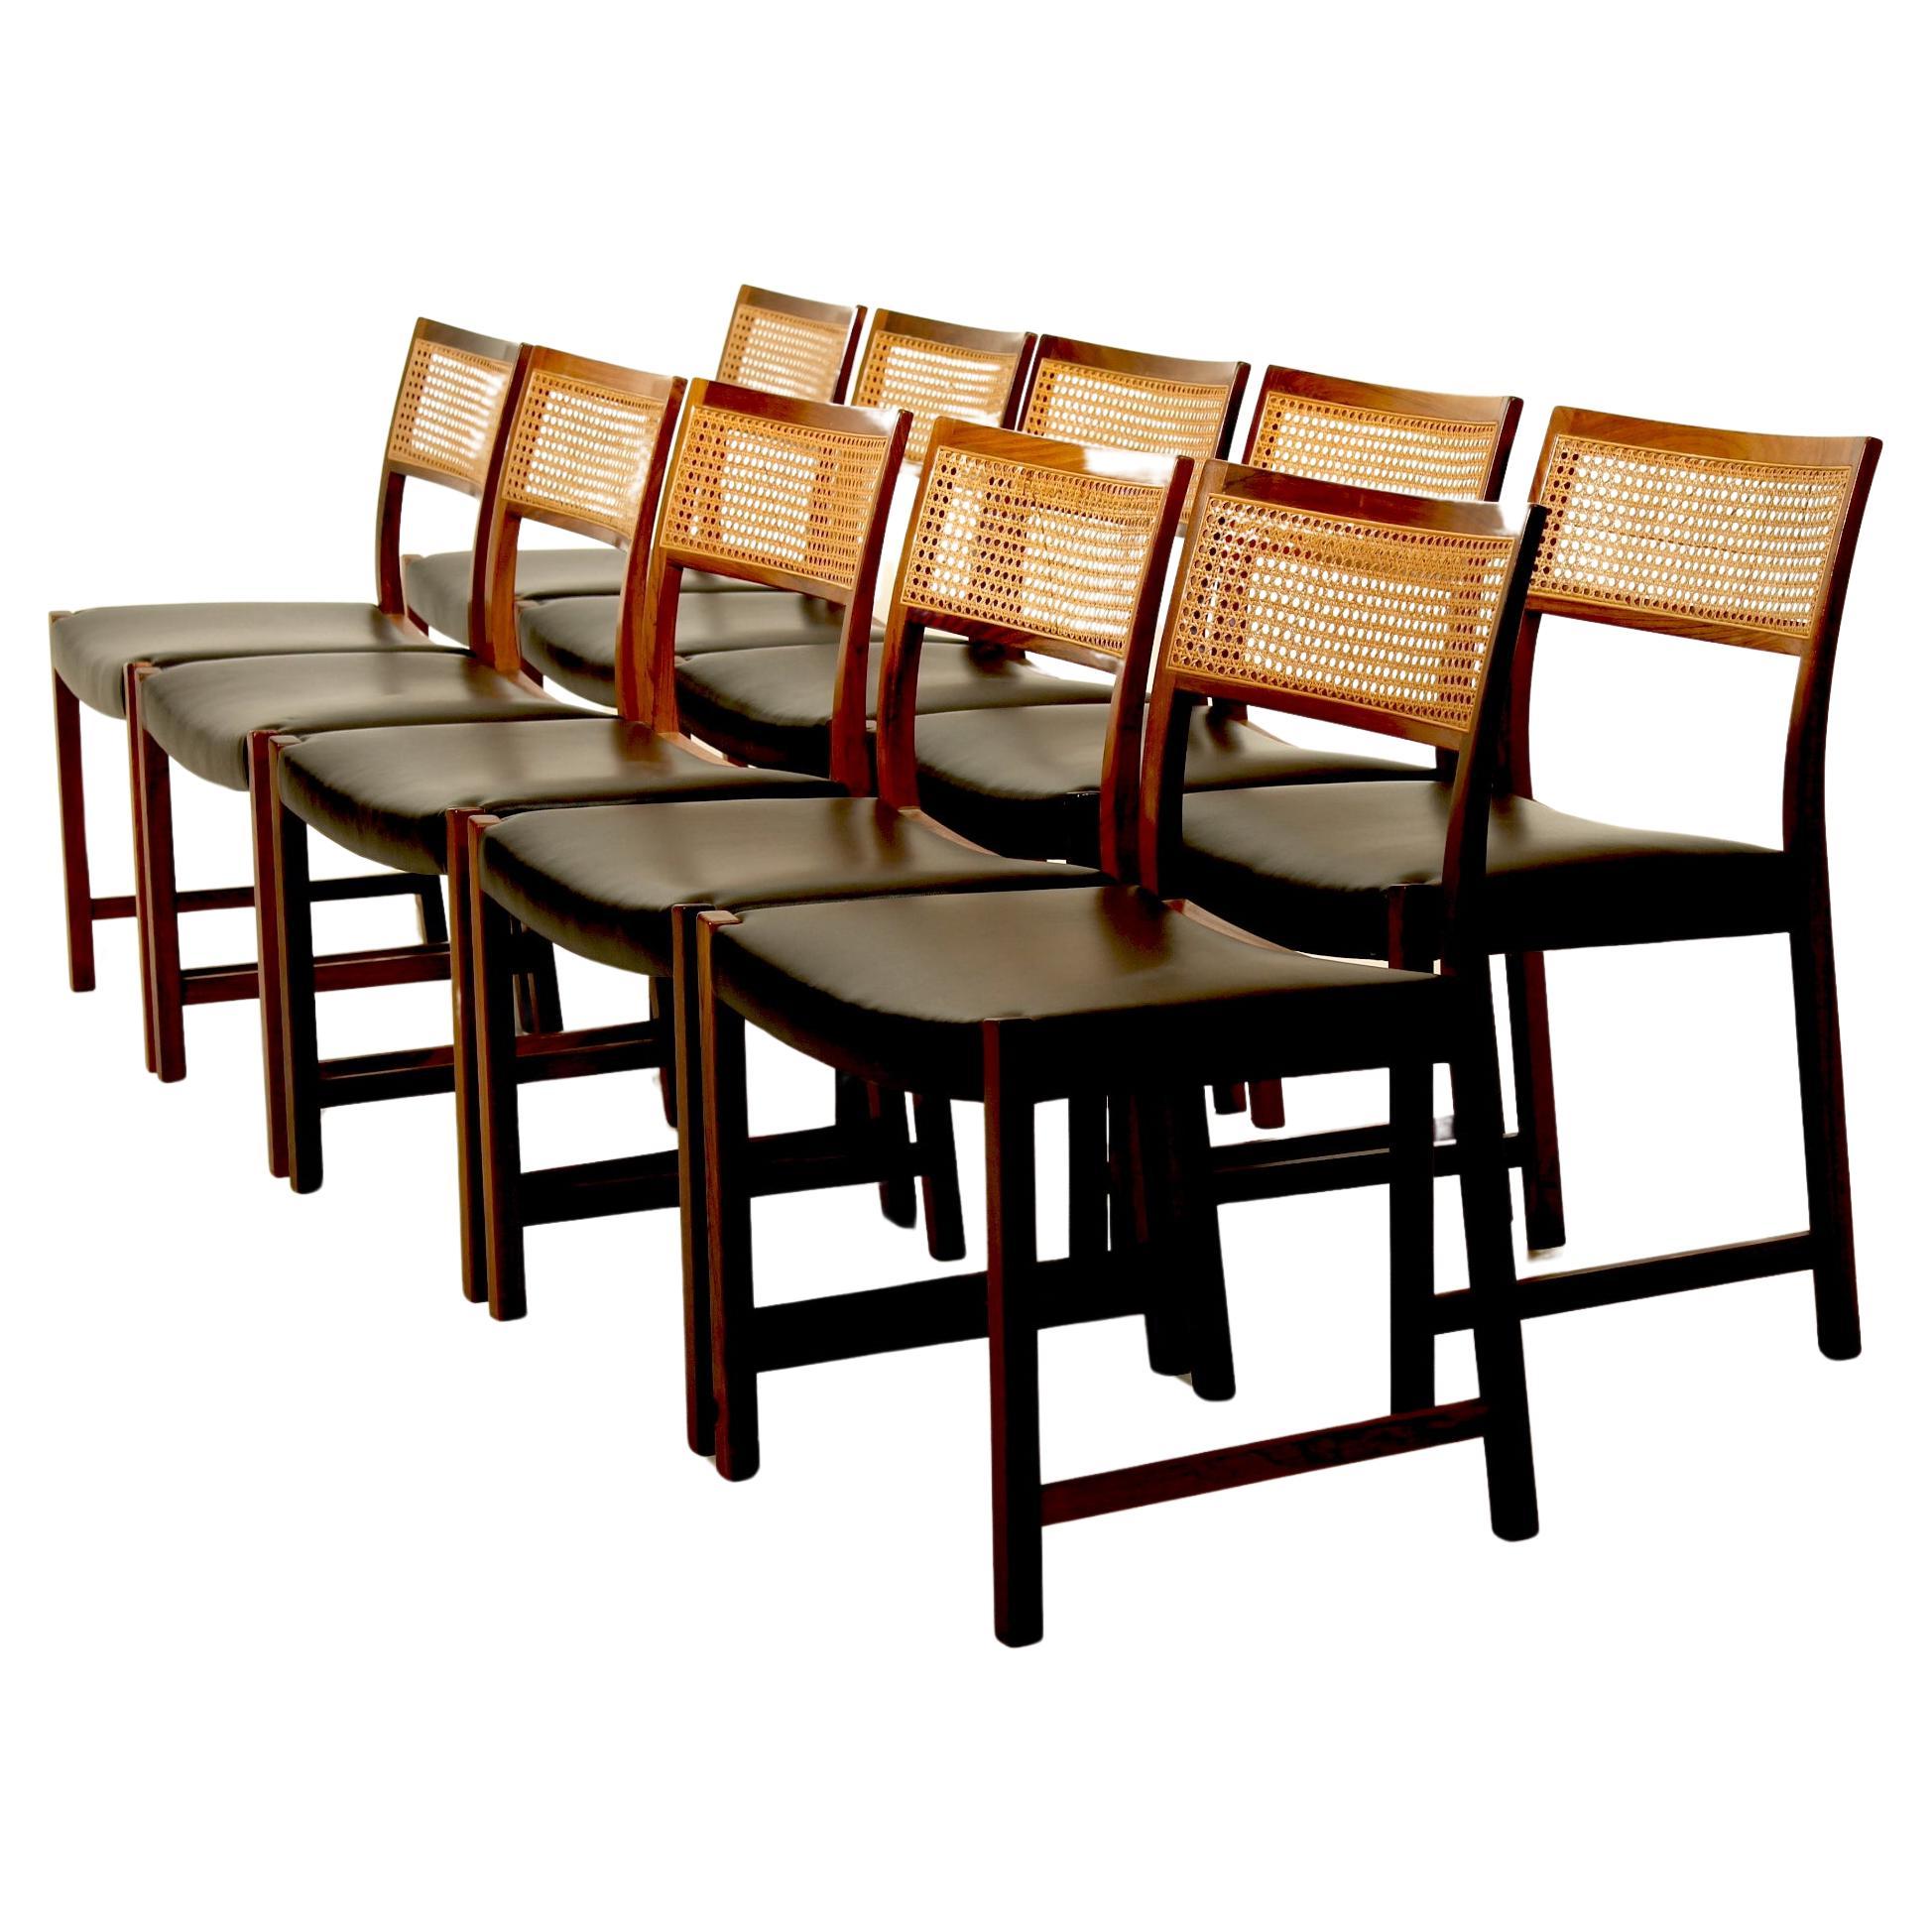 Set of 10 original vintage side chairs by Illum Vikkelsø, Denmark.